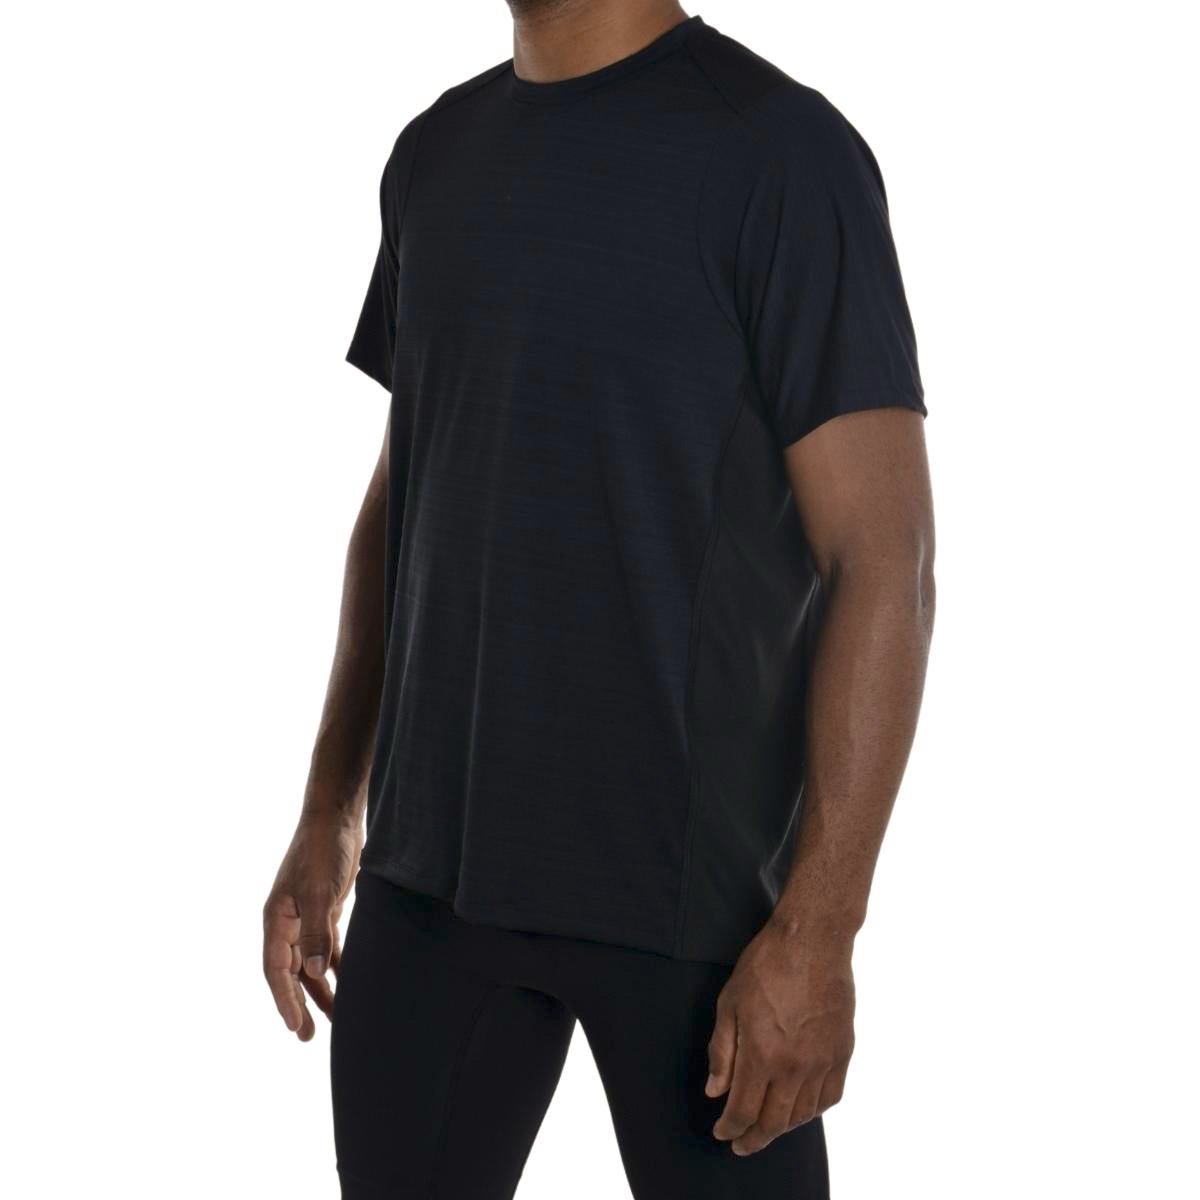 Camiseta dry fit masculina Selene Preto 2